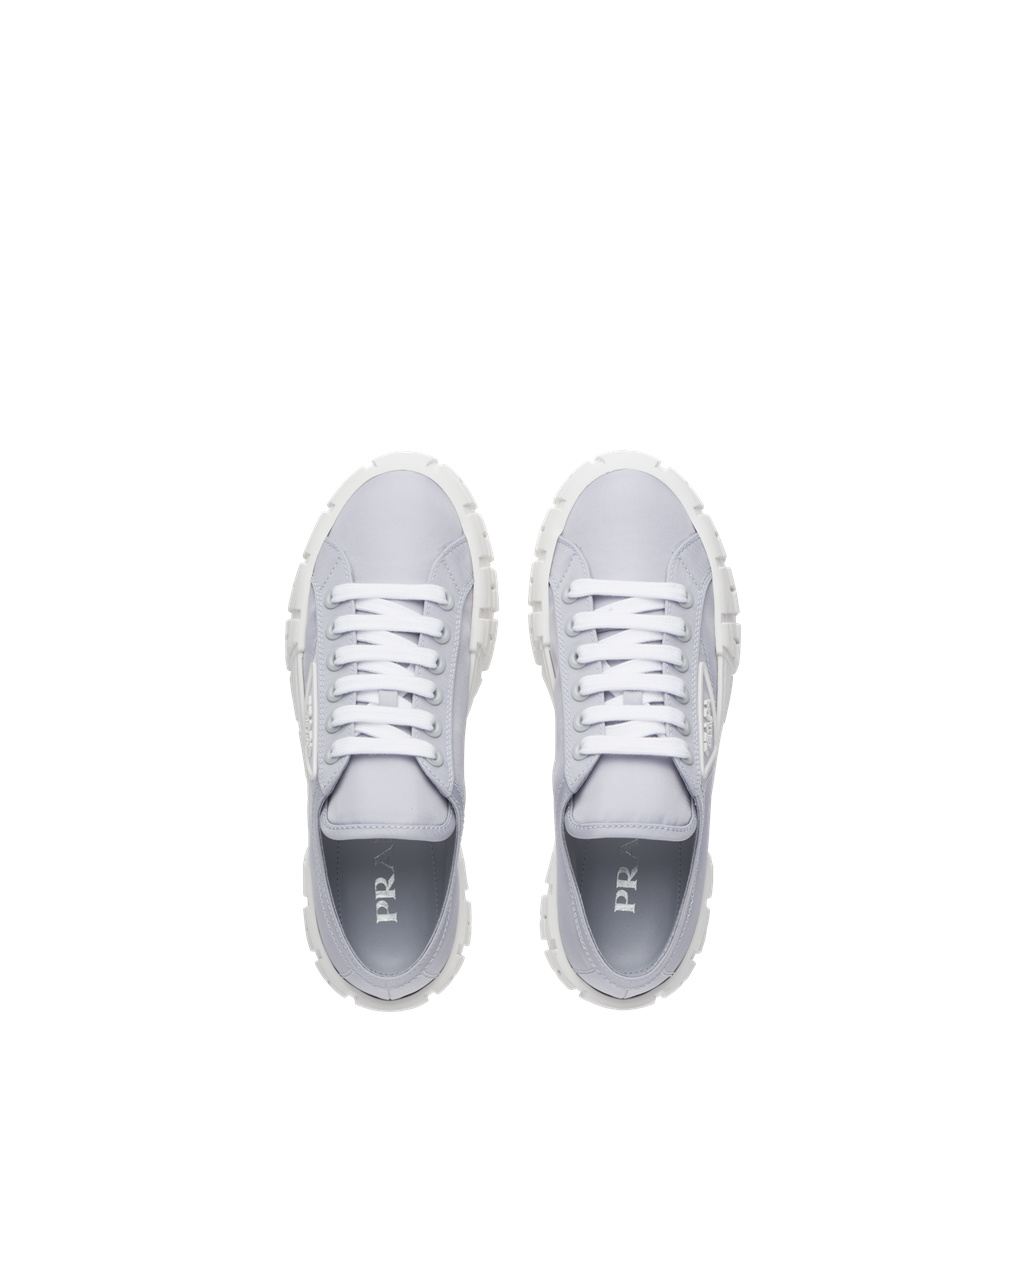 Prada Re-Nylon Gabardine Black / White Low Top Sneakers - Sneak in